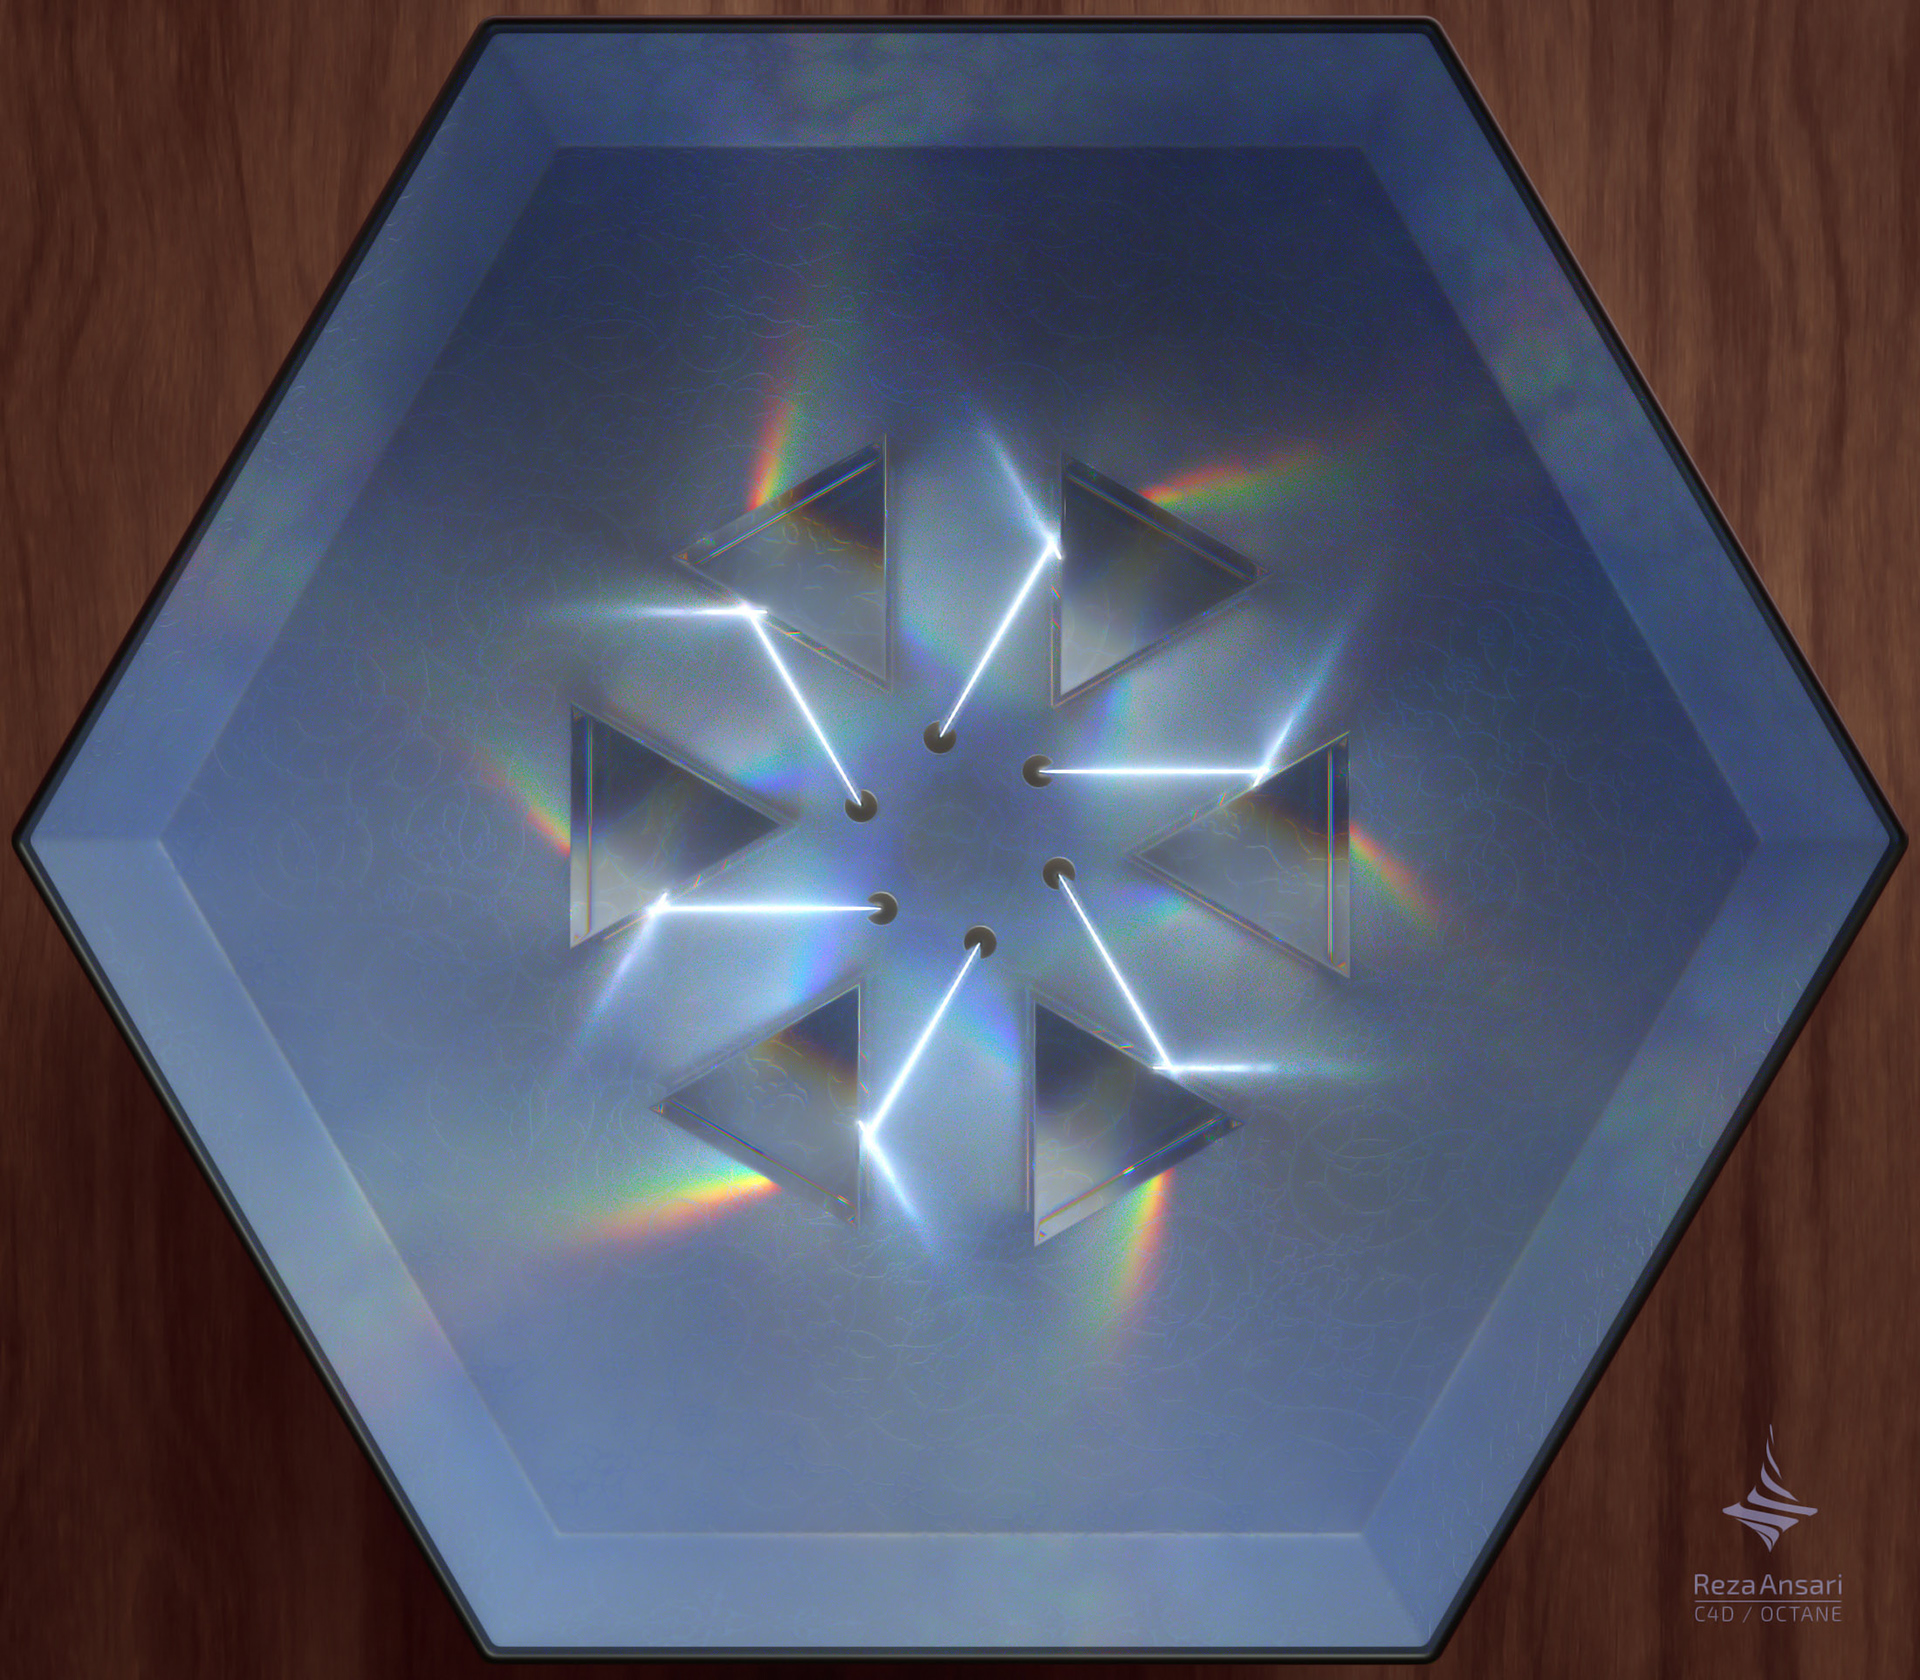 Prism Light